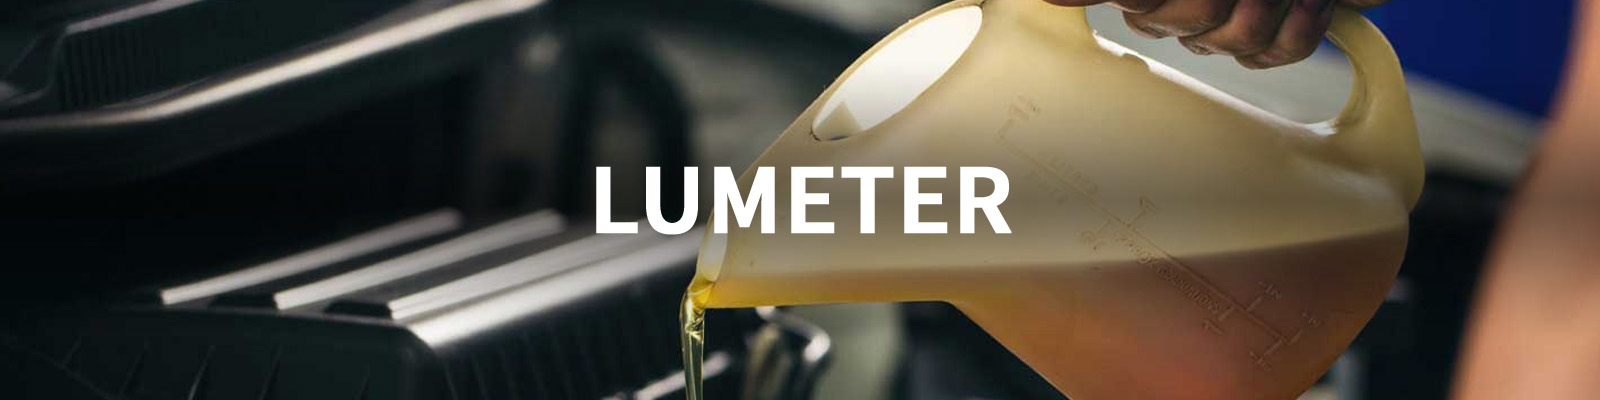 Lumeter Oil Jug